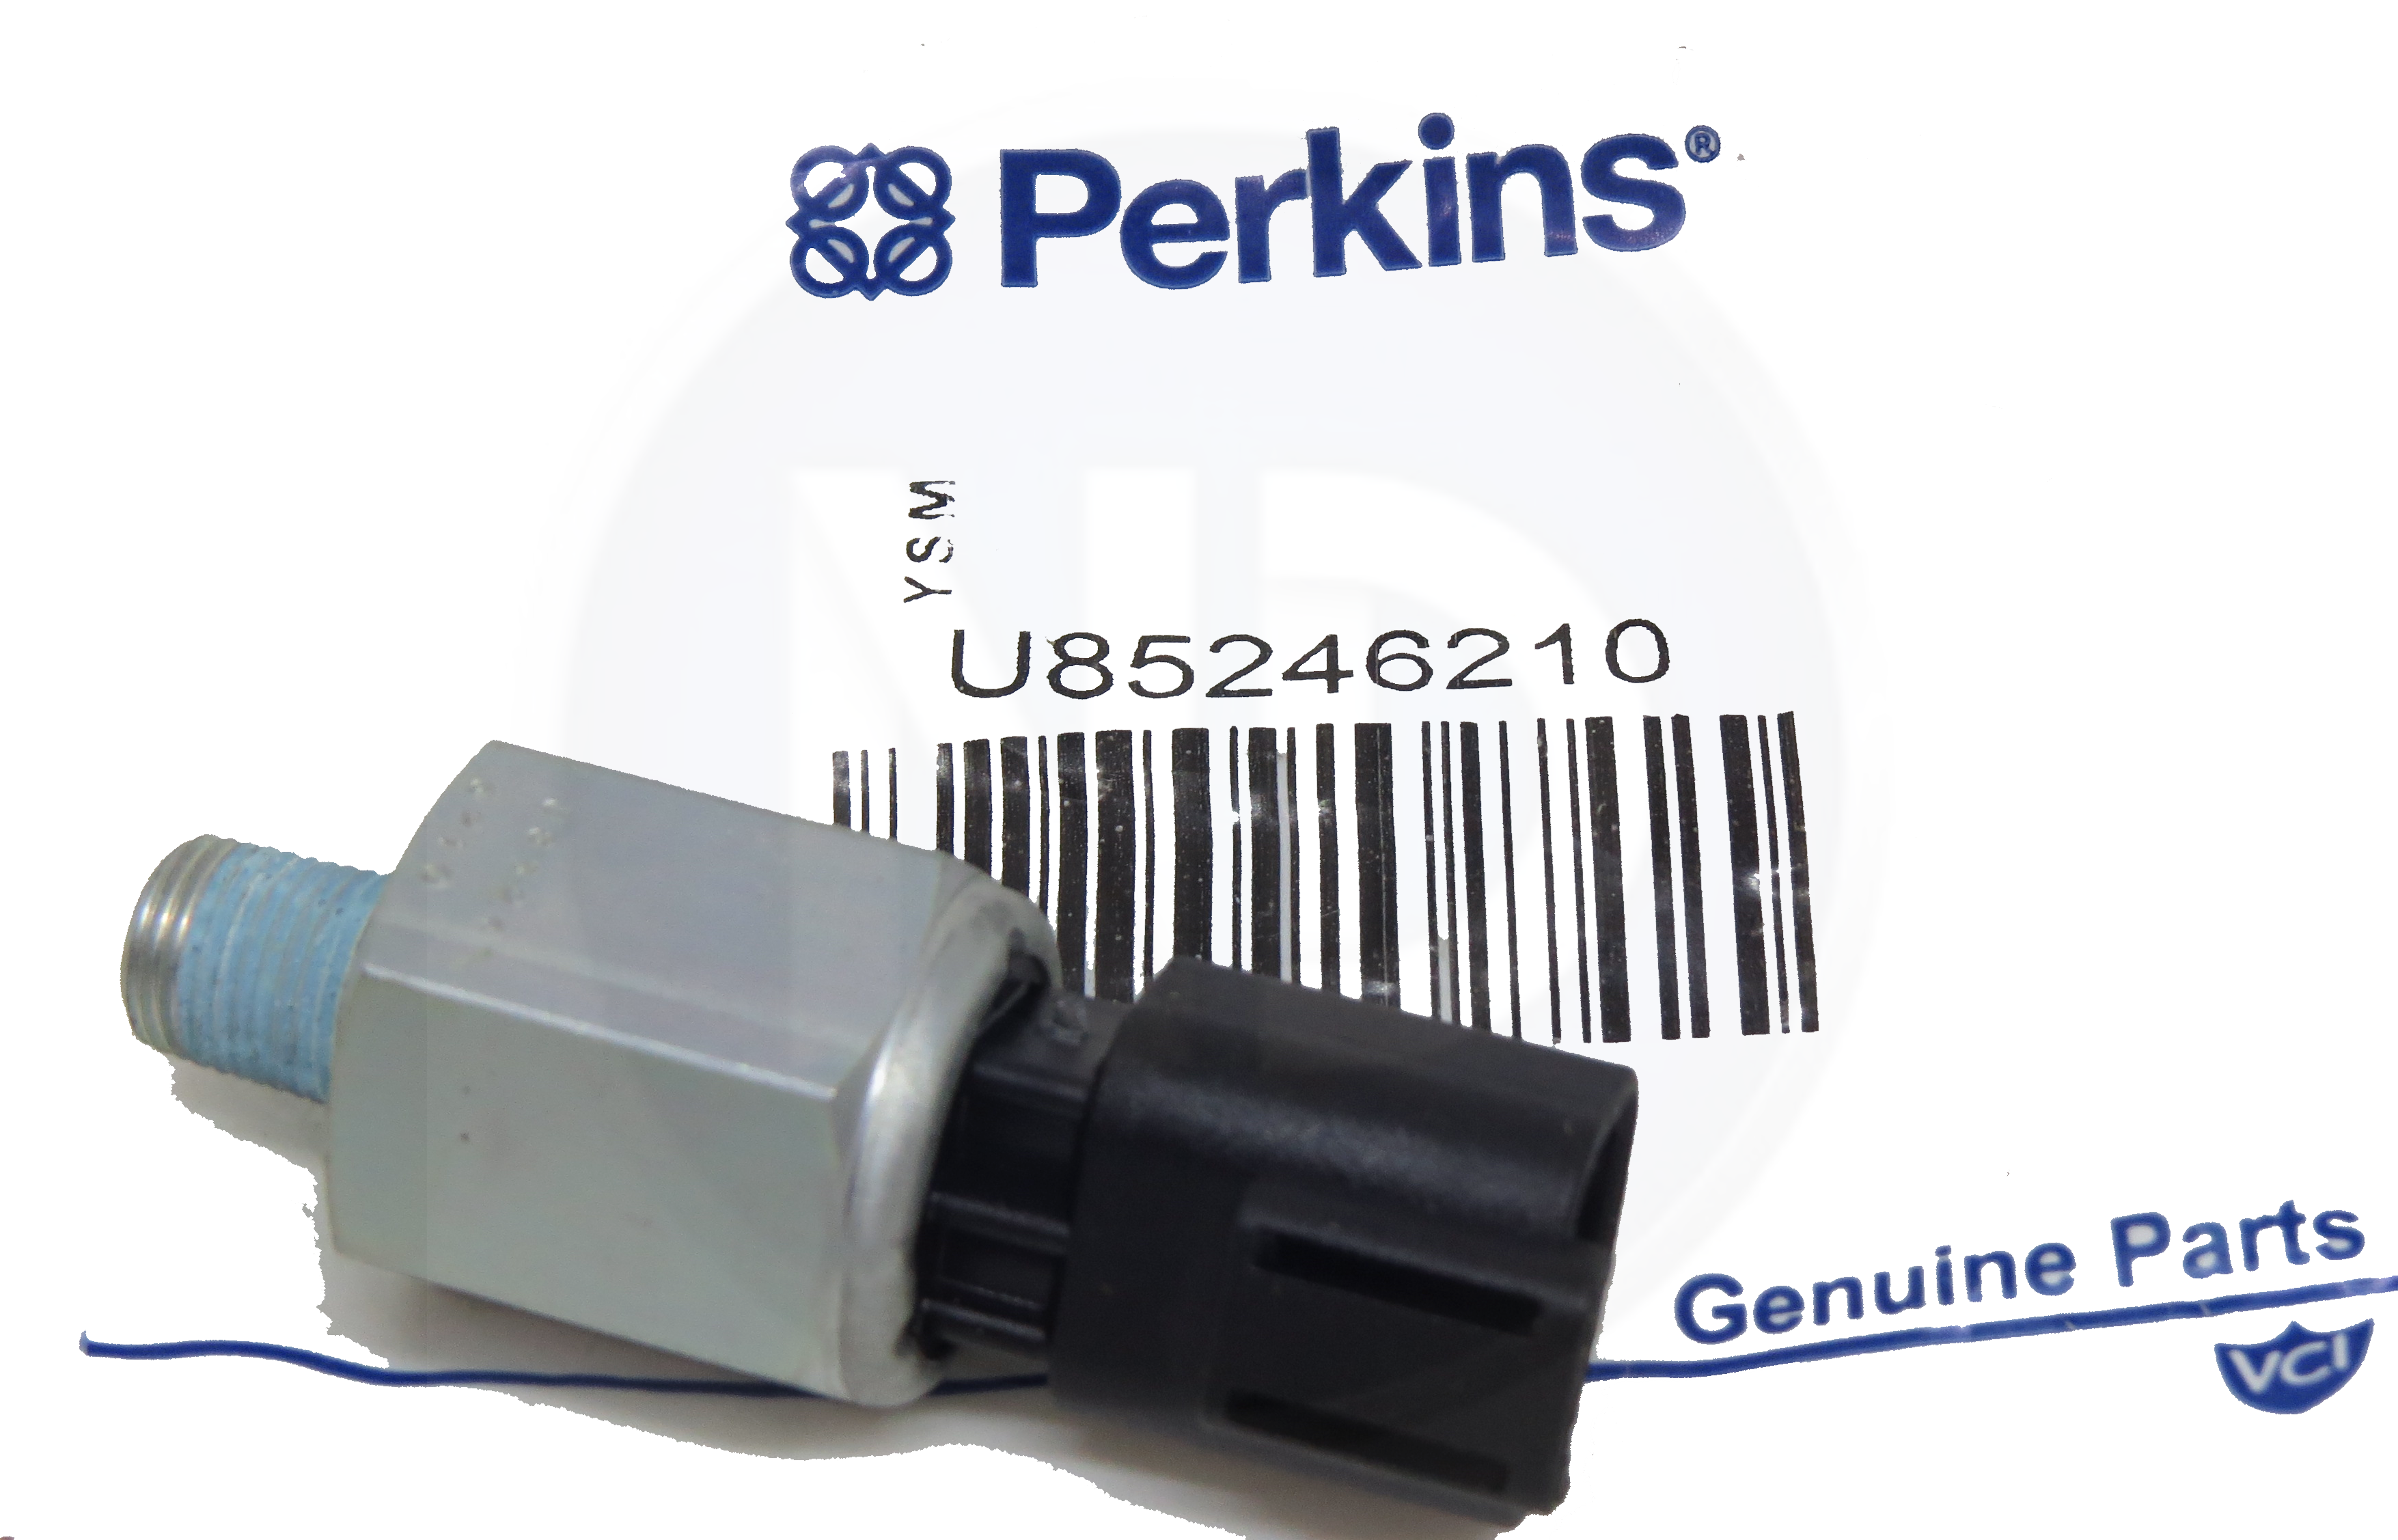 U85246210 Perkins Oil Pressure Sender